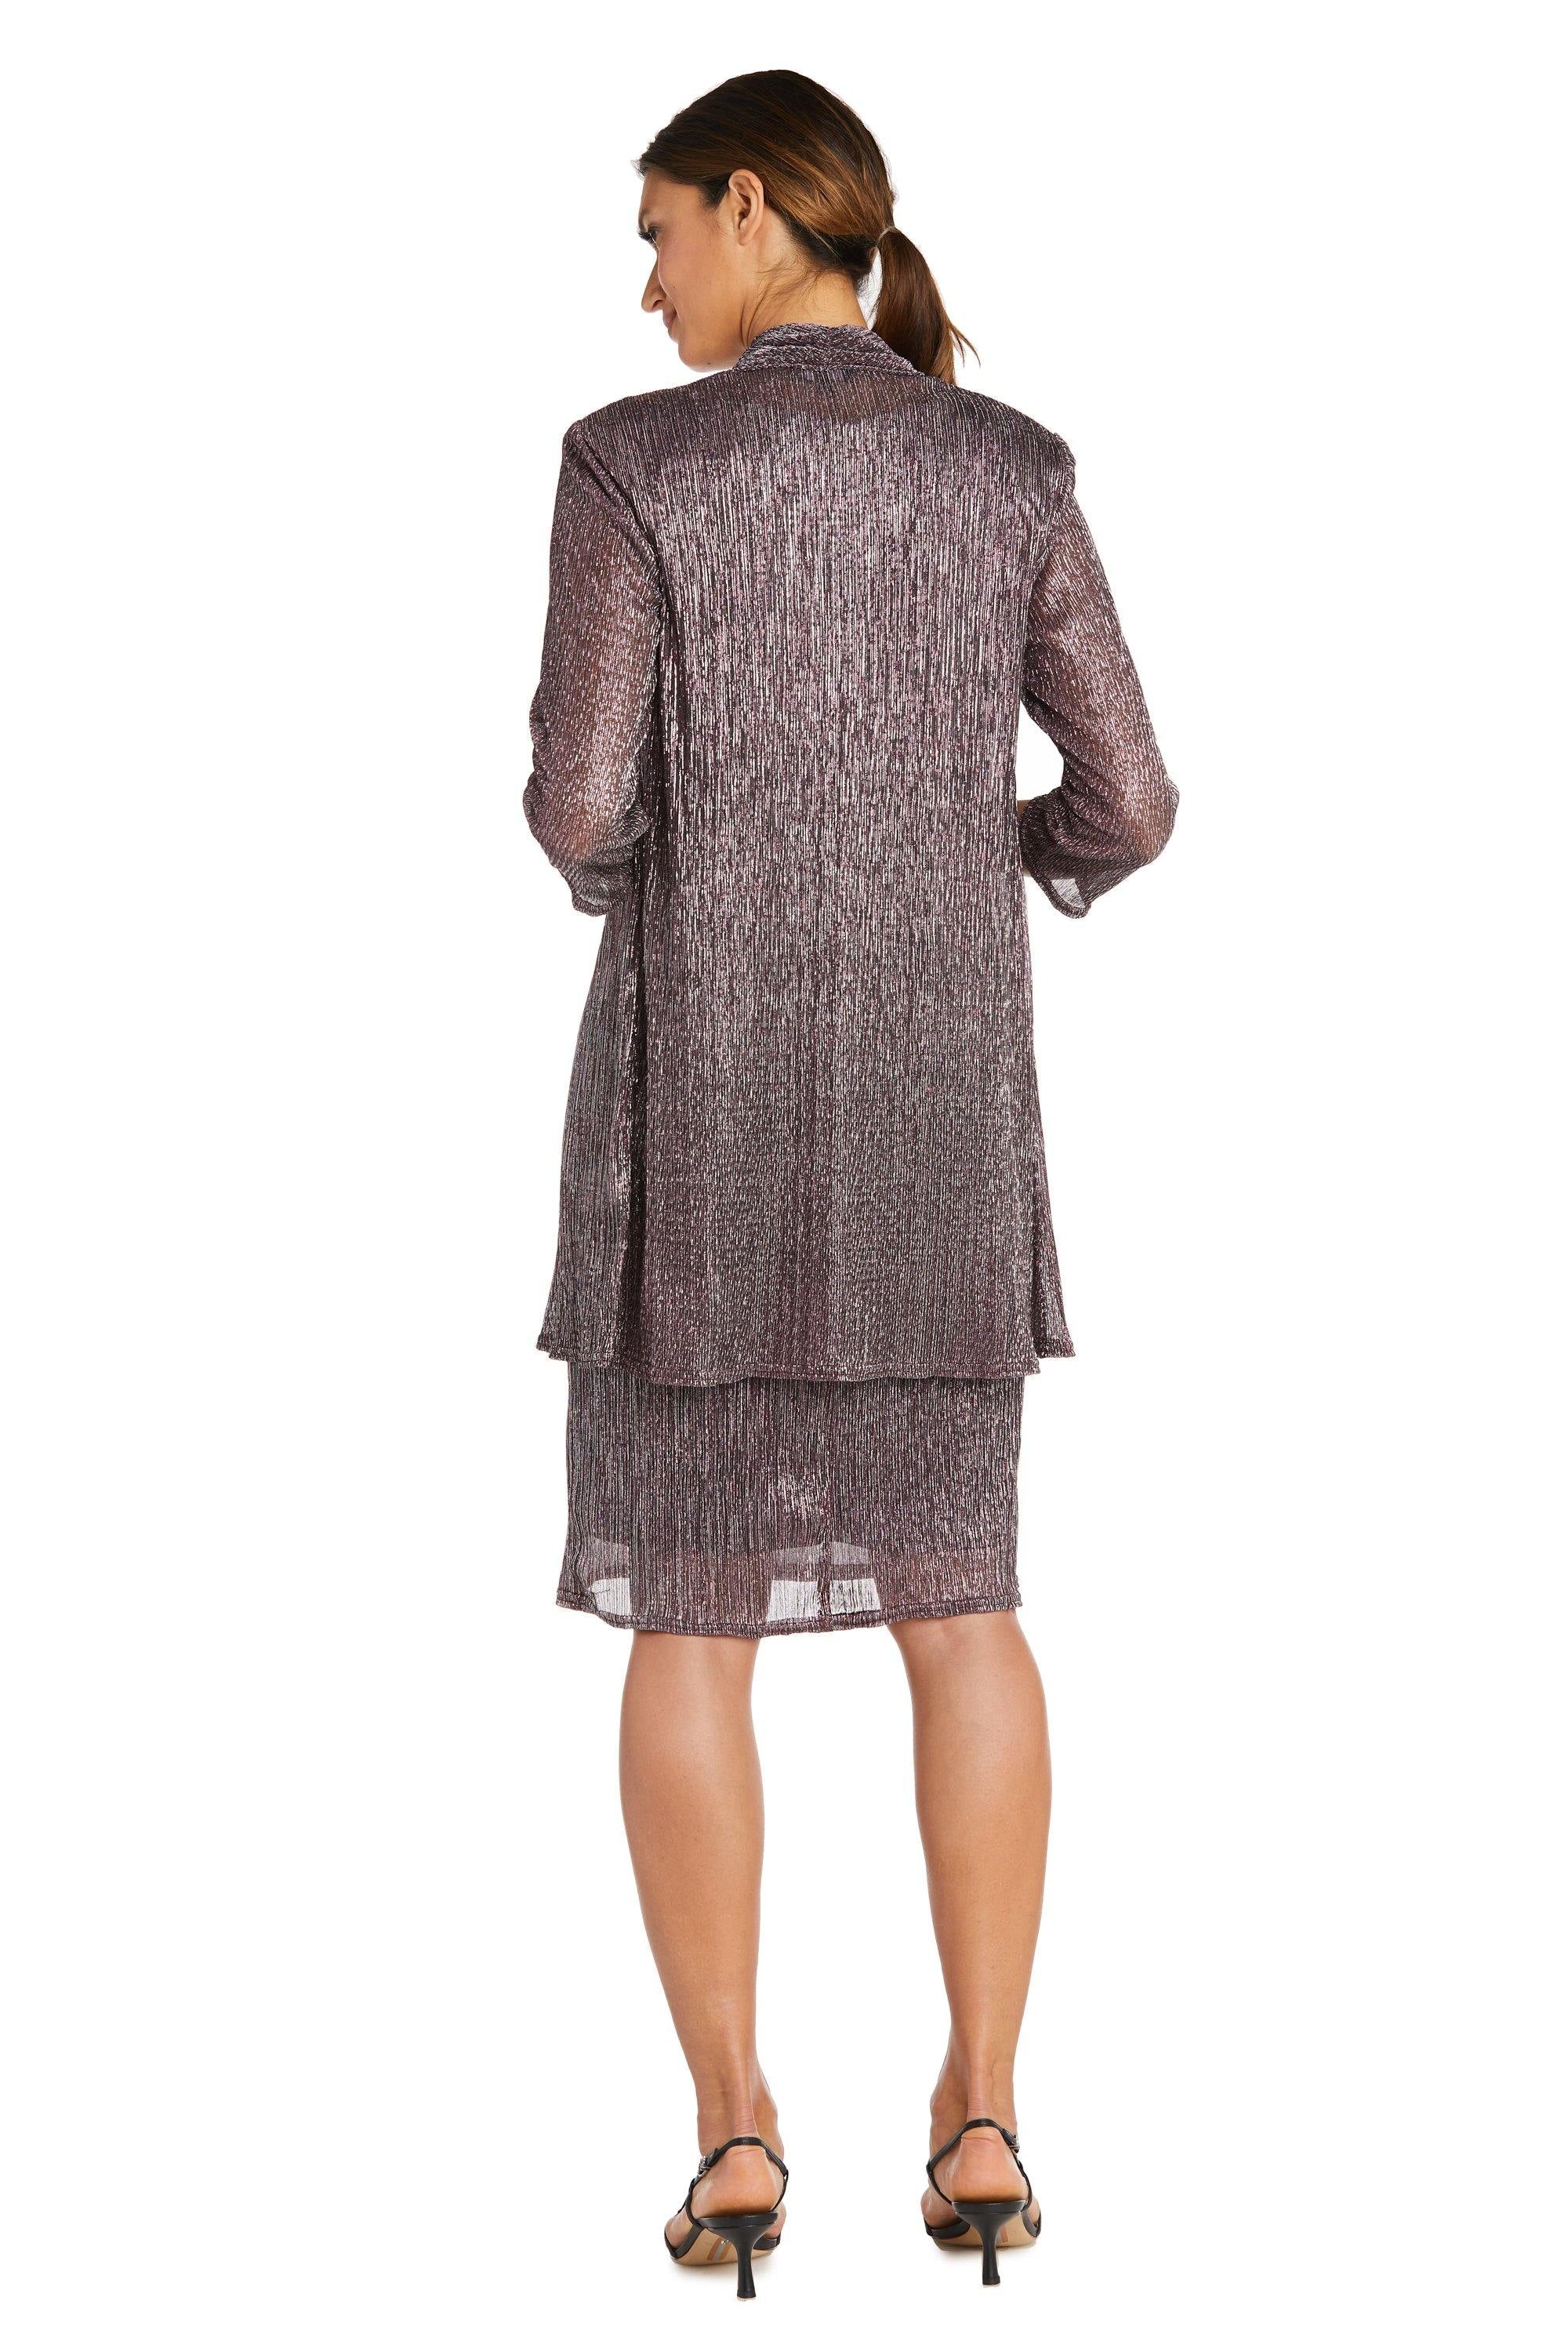 R&M Richards Short Metallic Petite Dress 5191P - The Dress Outlet